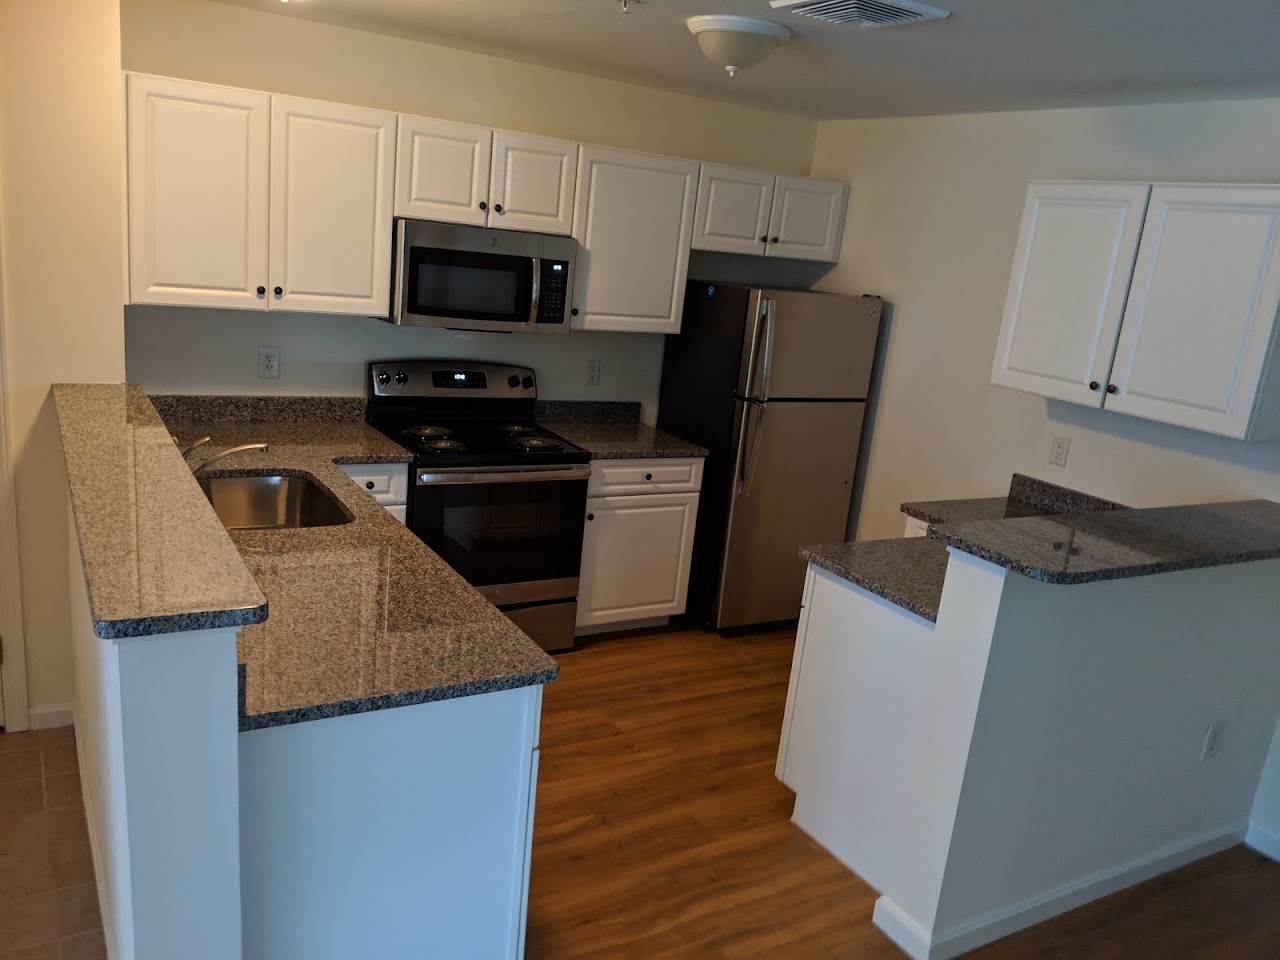 Photo of KENSINGTON WOODS. Affordable housing located at 3 KENSINGTON LANE BEDFORD, NH 03110